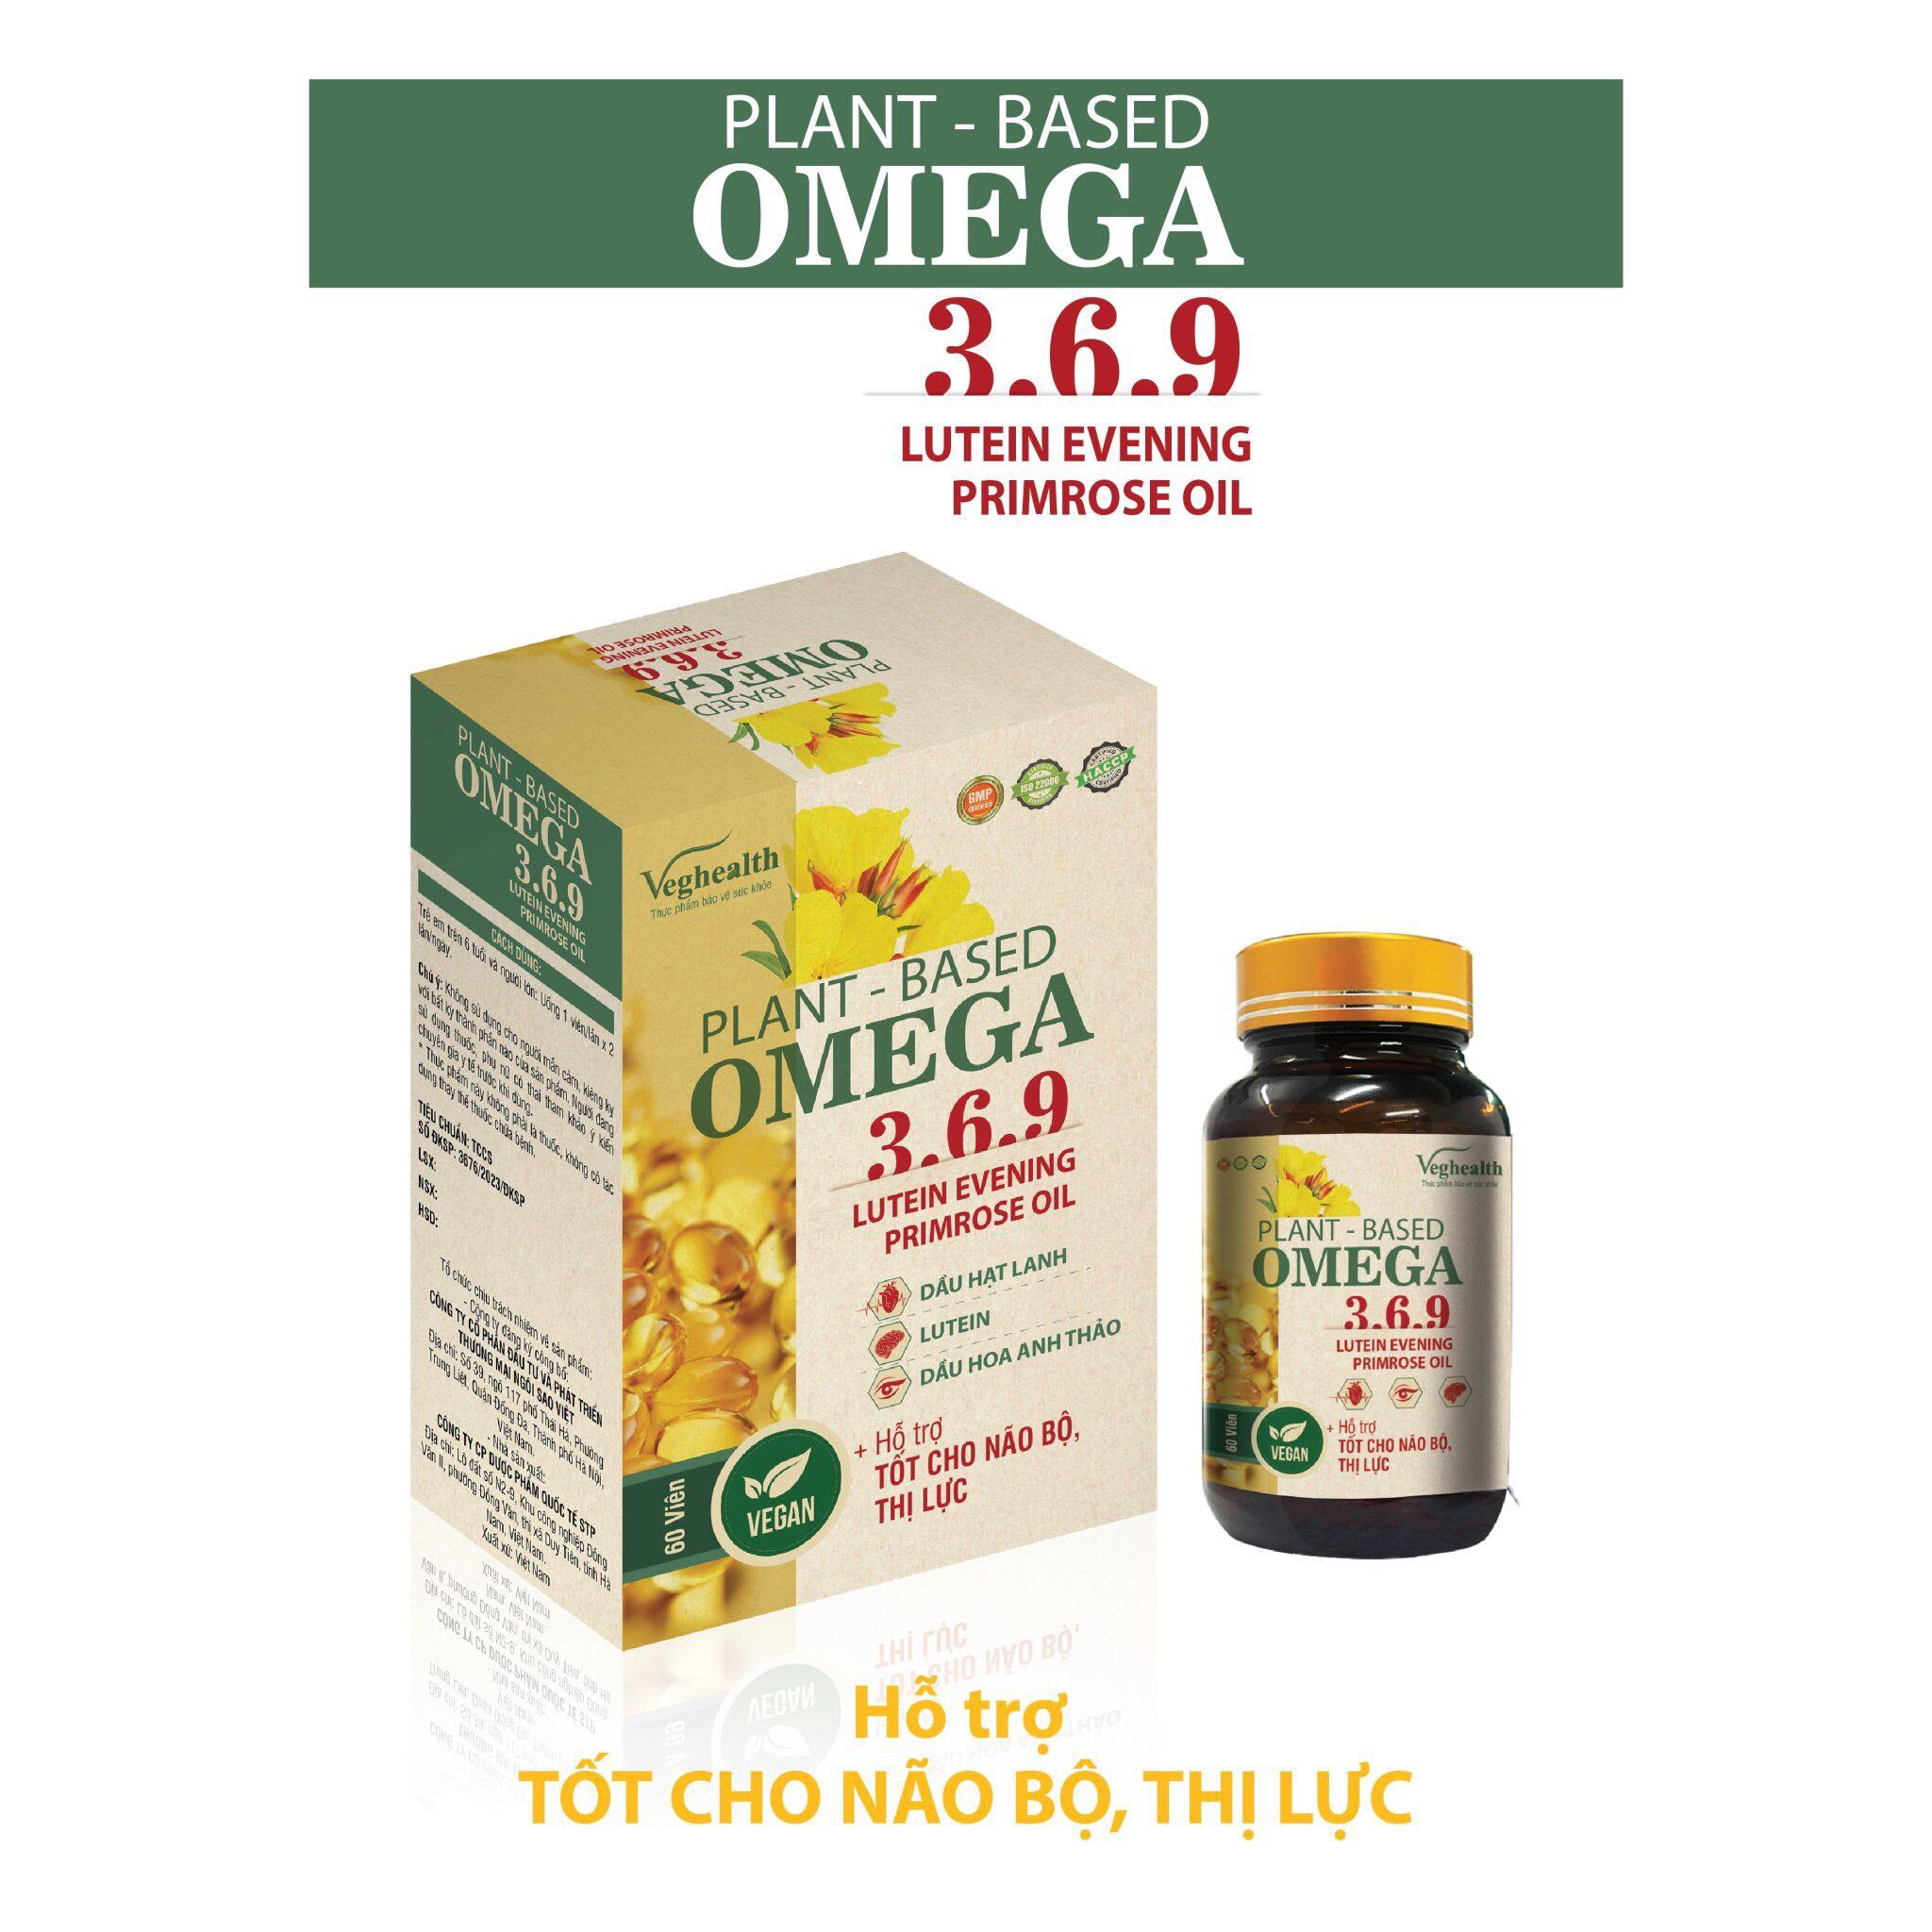 Plant-based omega 3.6.9 Lutein Evening Primrose Oil 